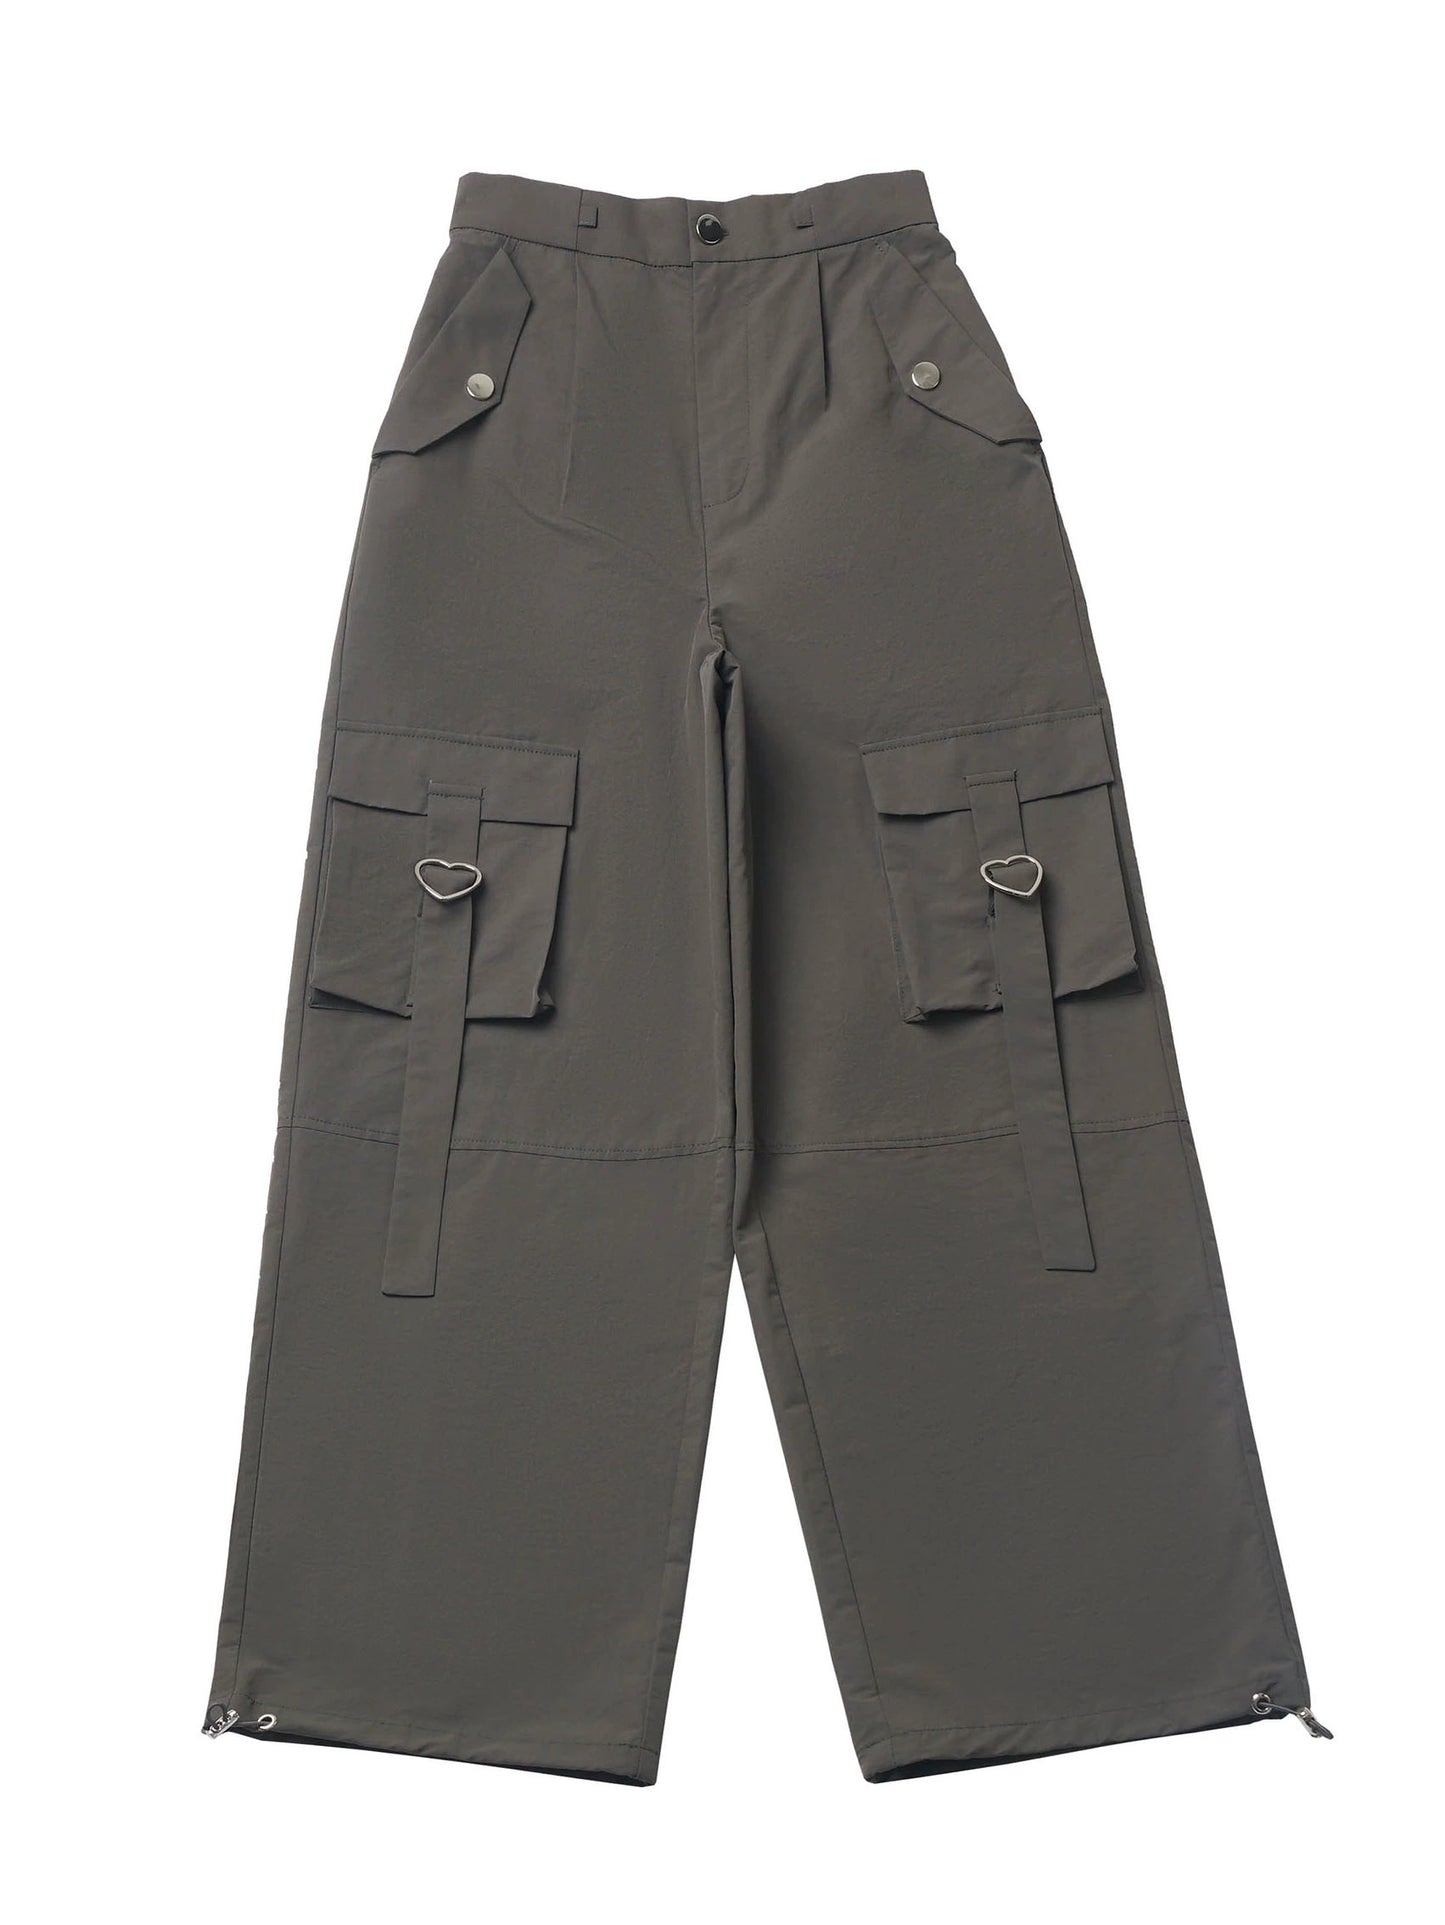 3-color retro wide cargo pants quick dry cool pants